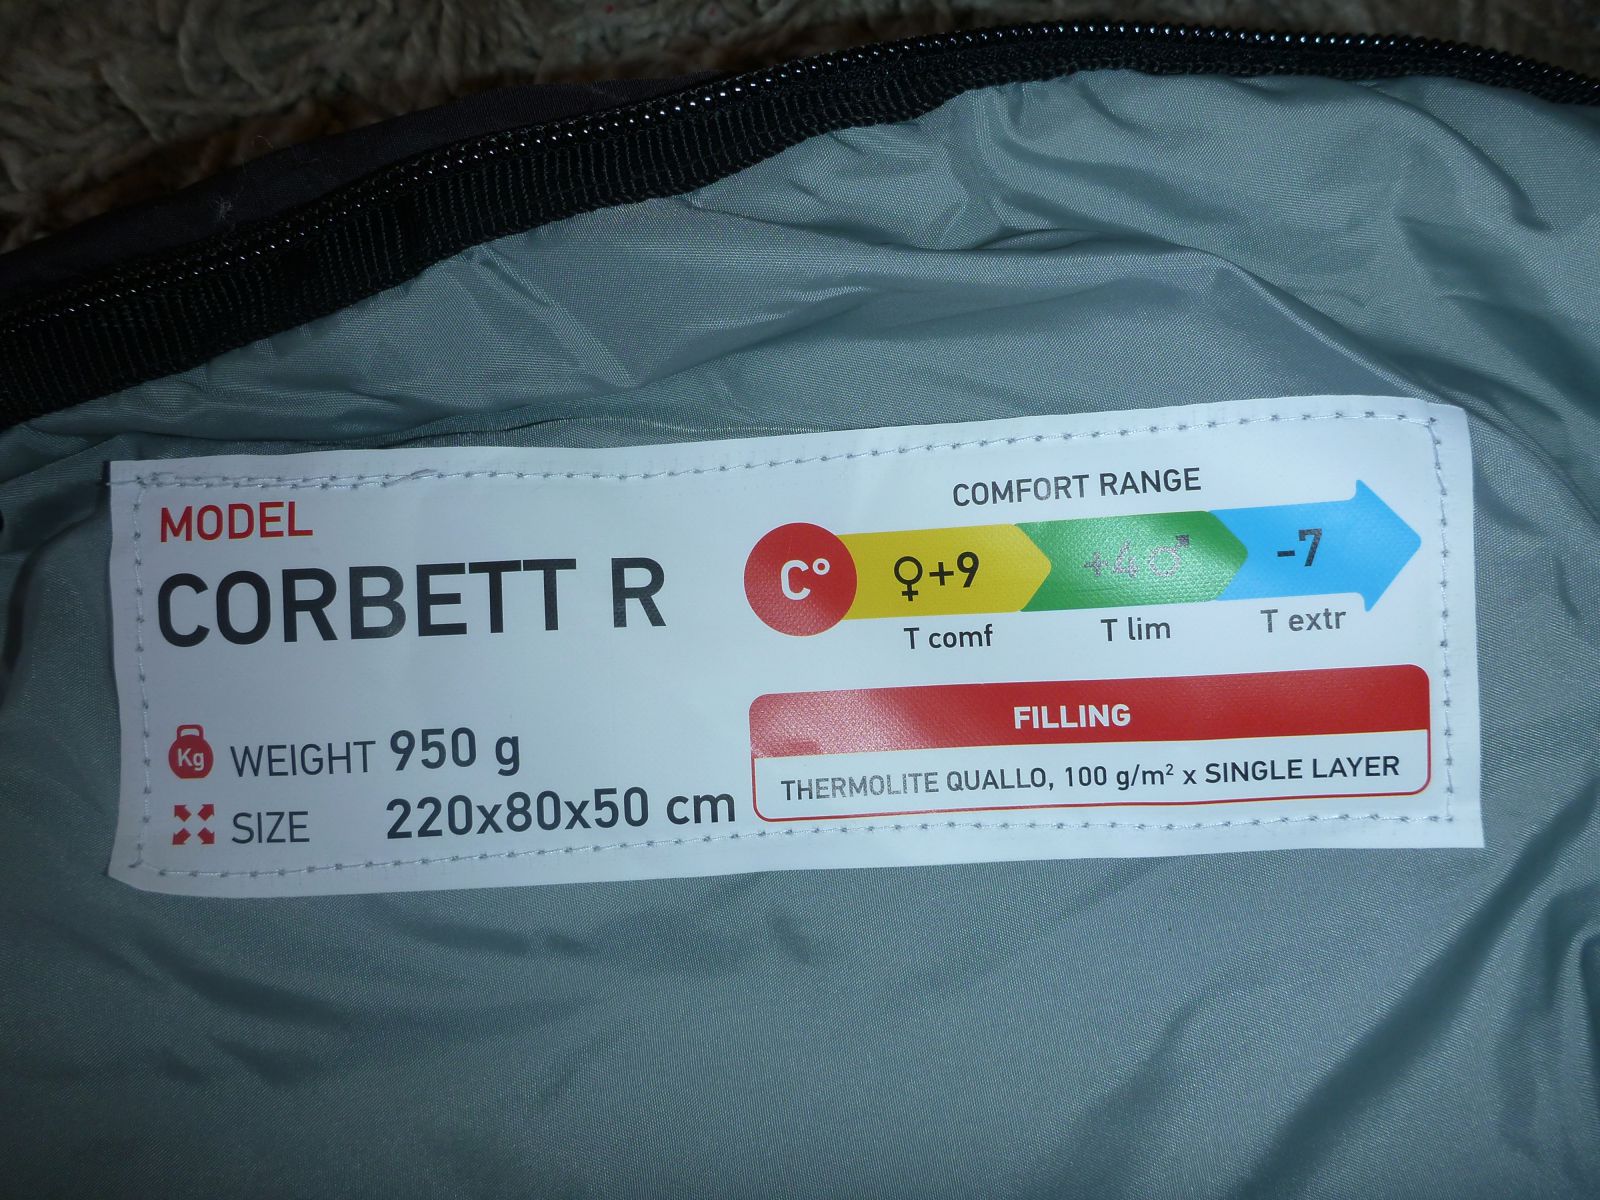 температурный режим спальника Corbett